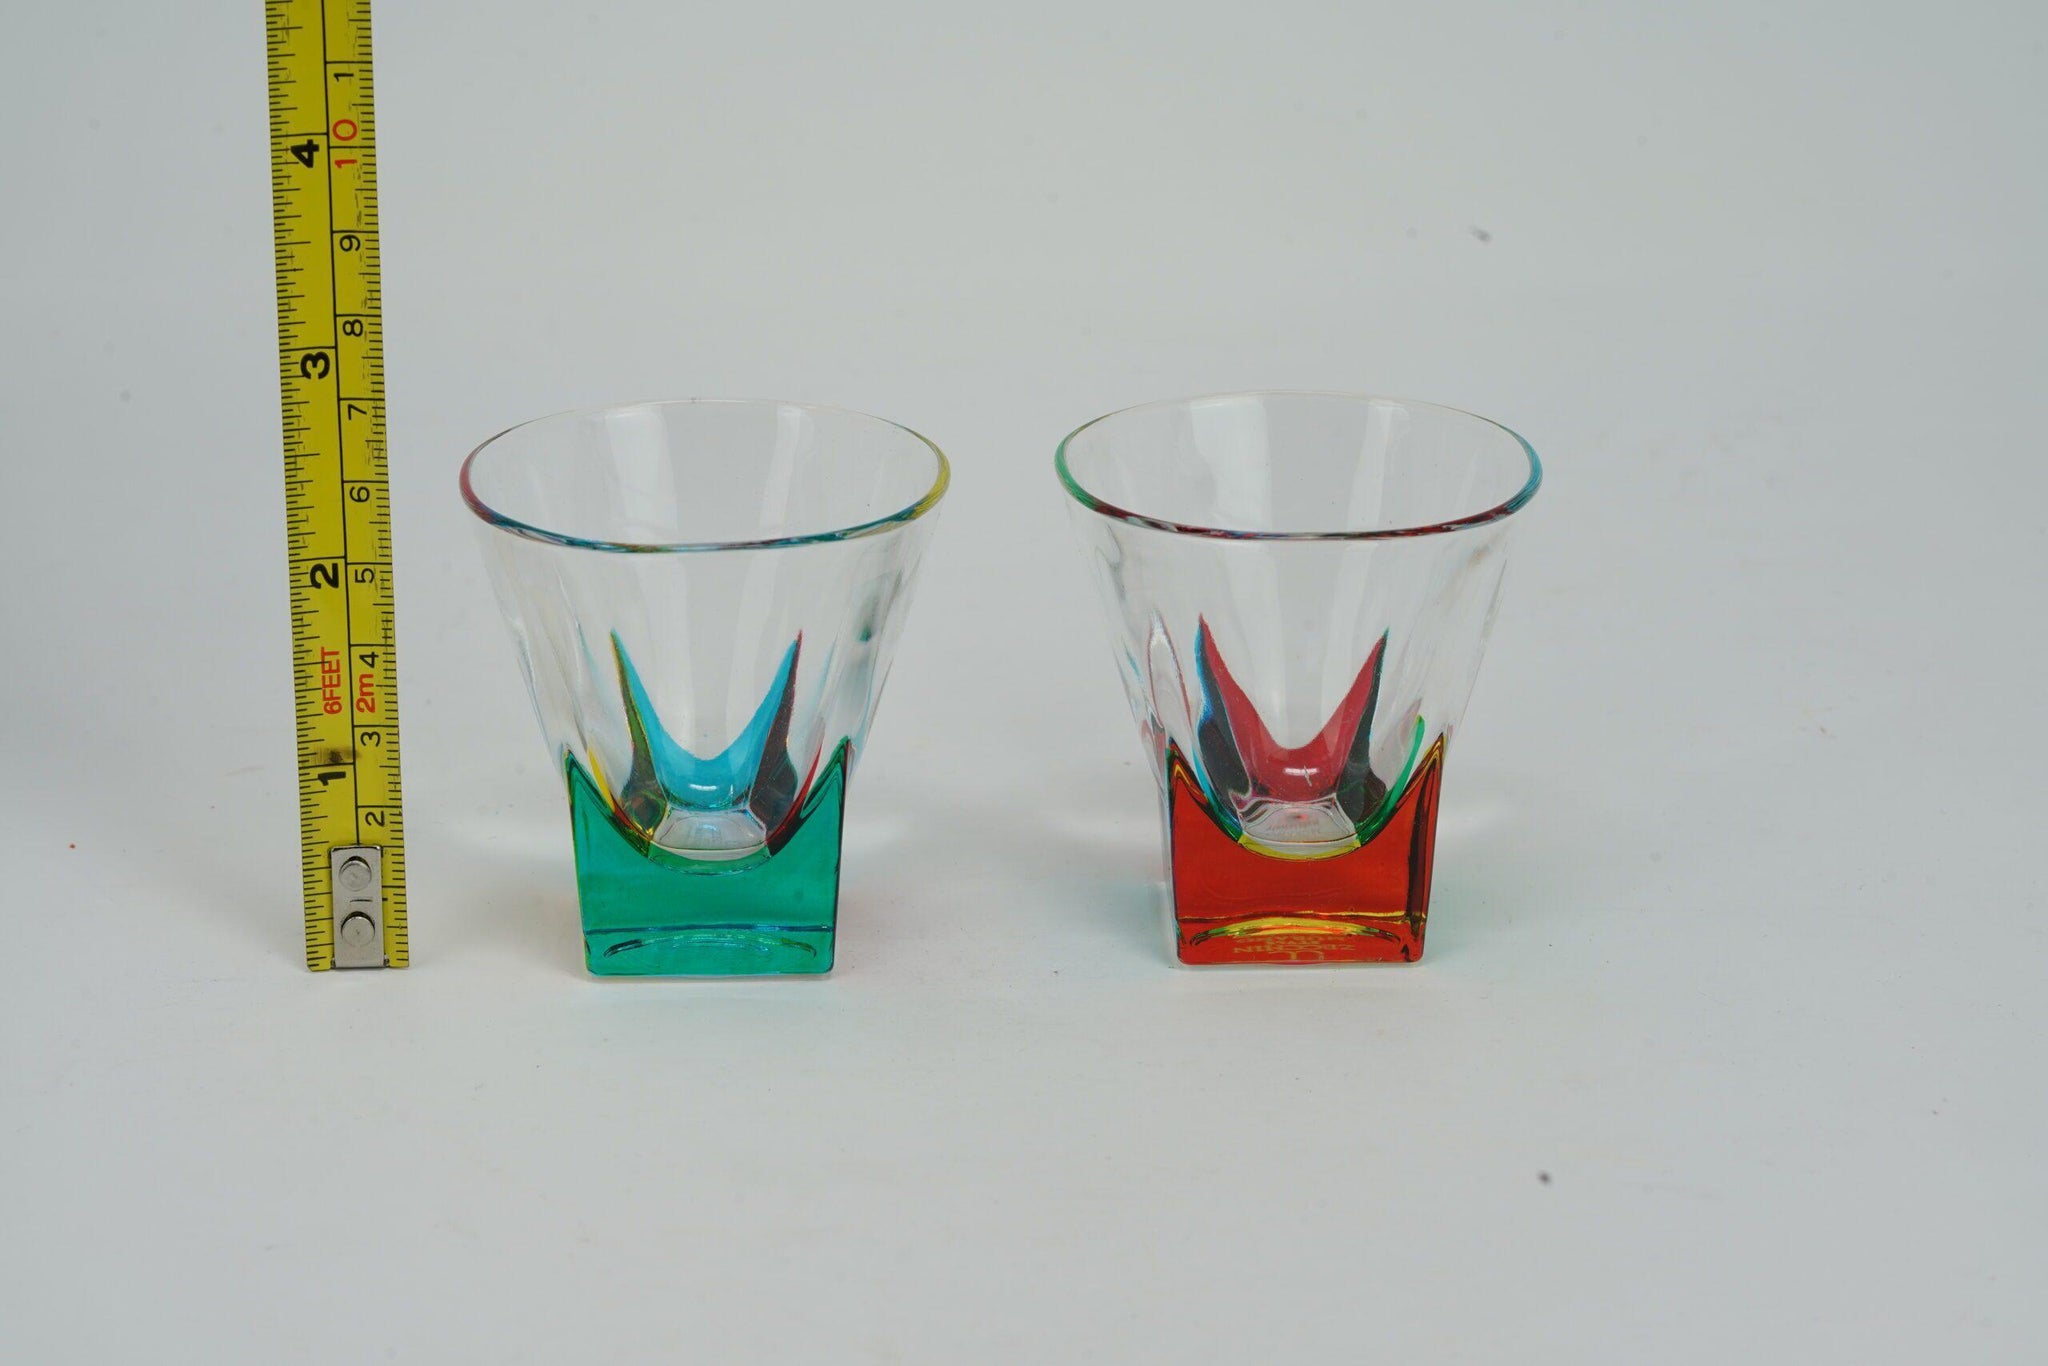 Ceramic Fish Eyeglass Holders (set of 6) - Eyeglass Holders Wholesale